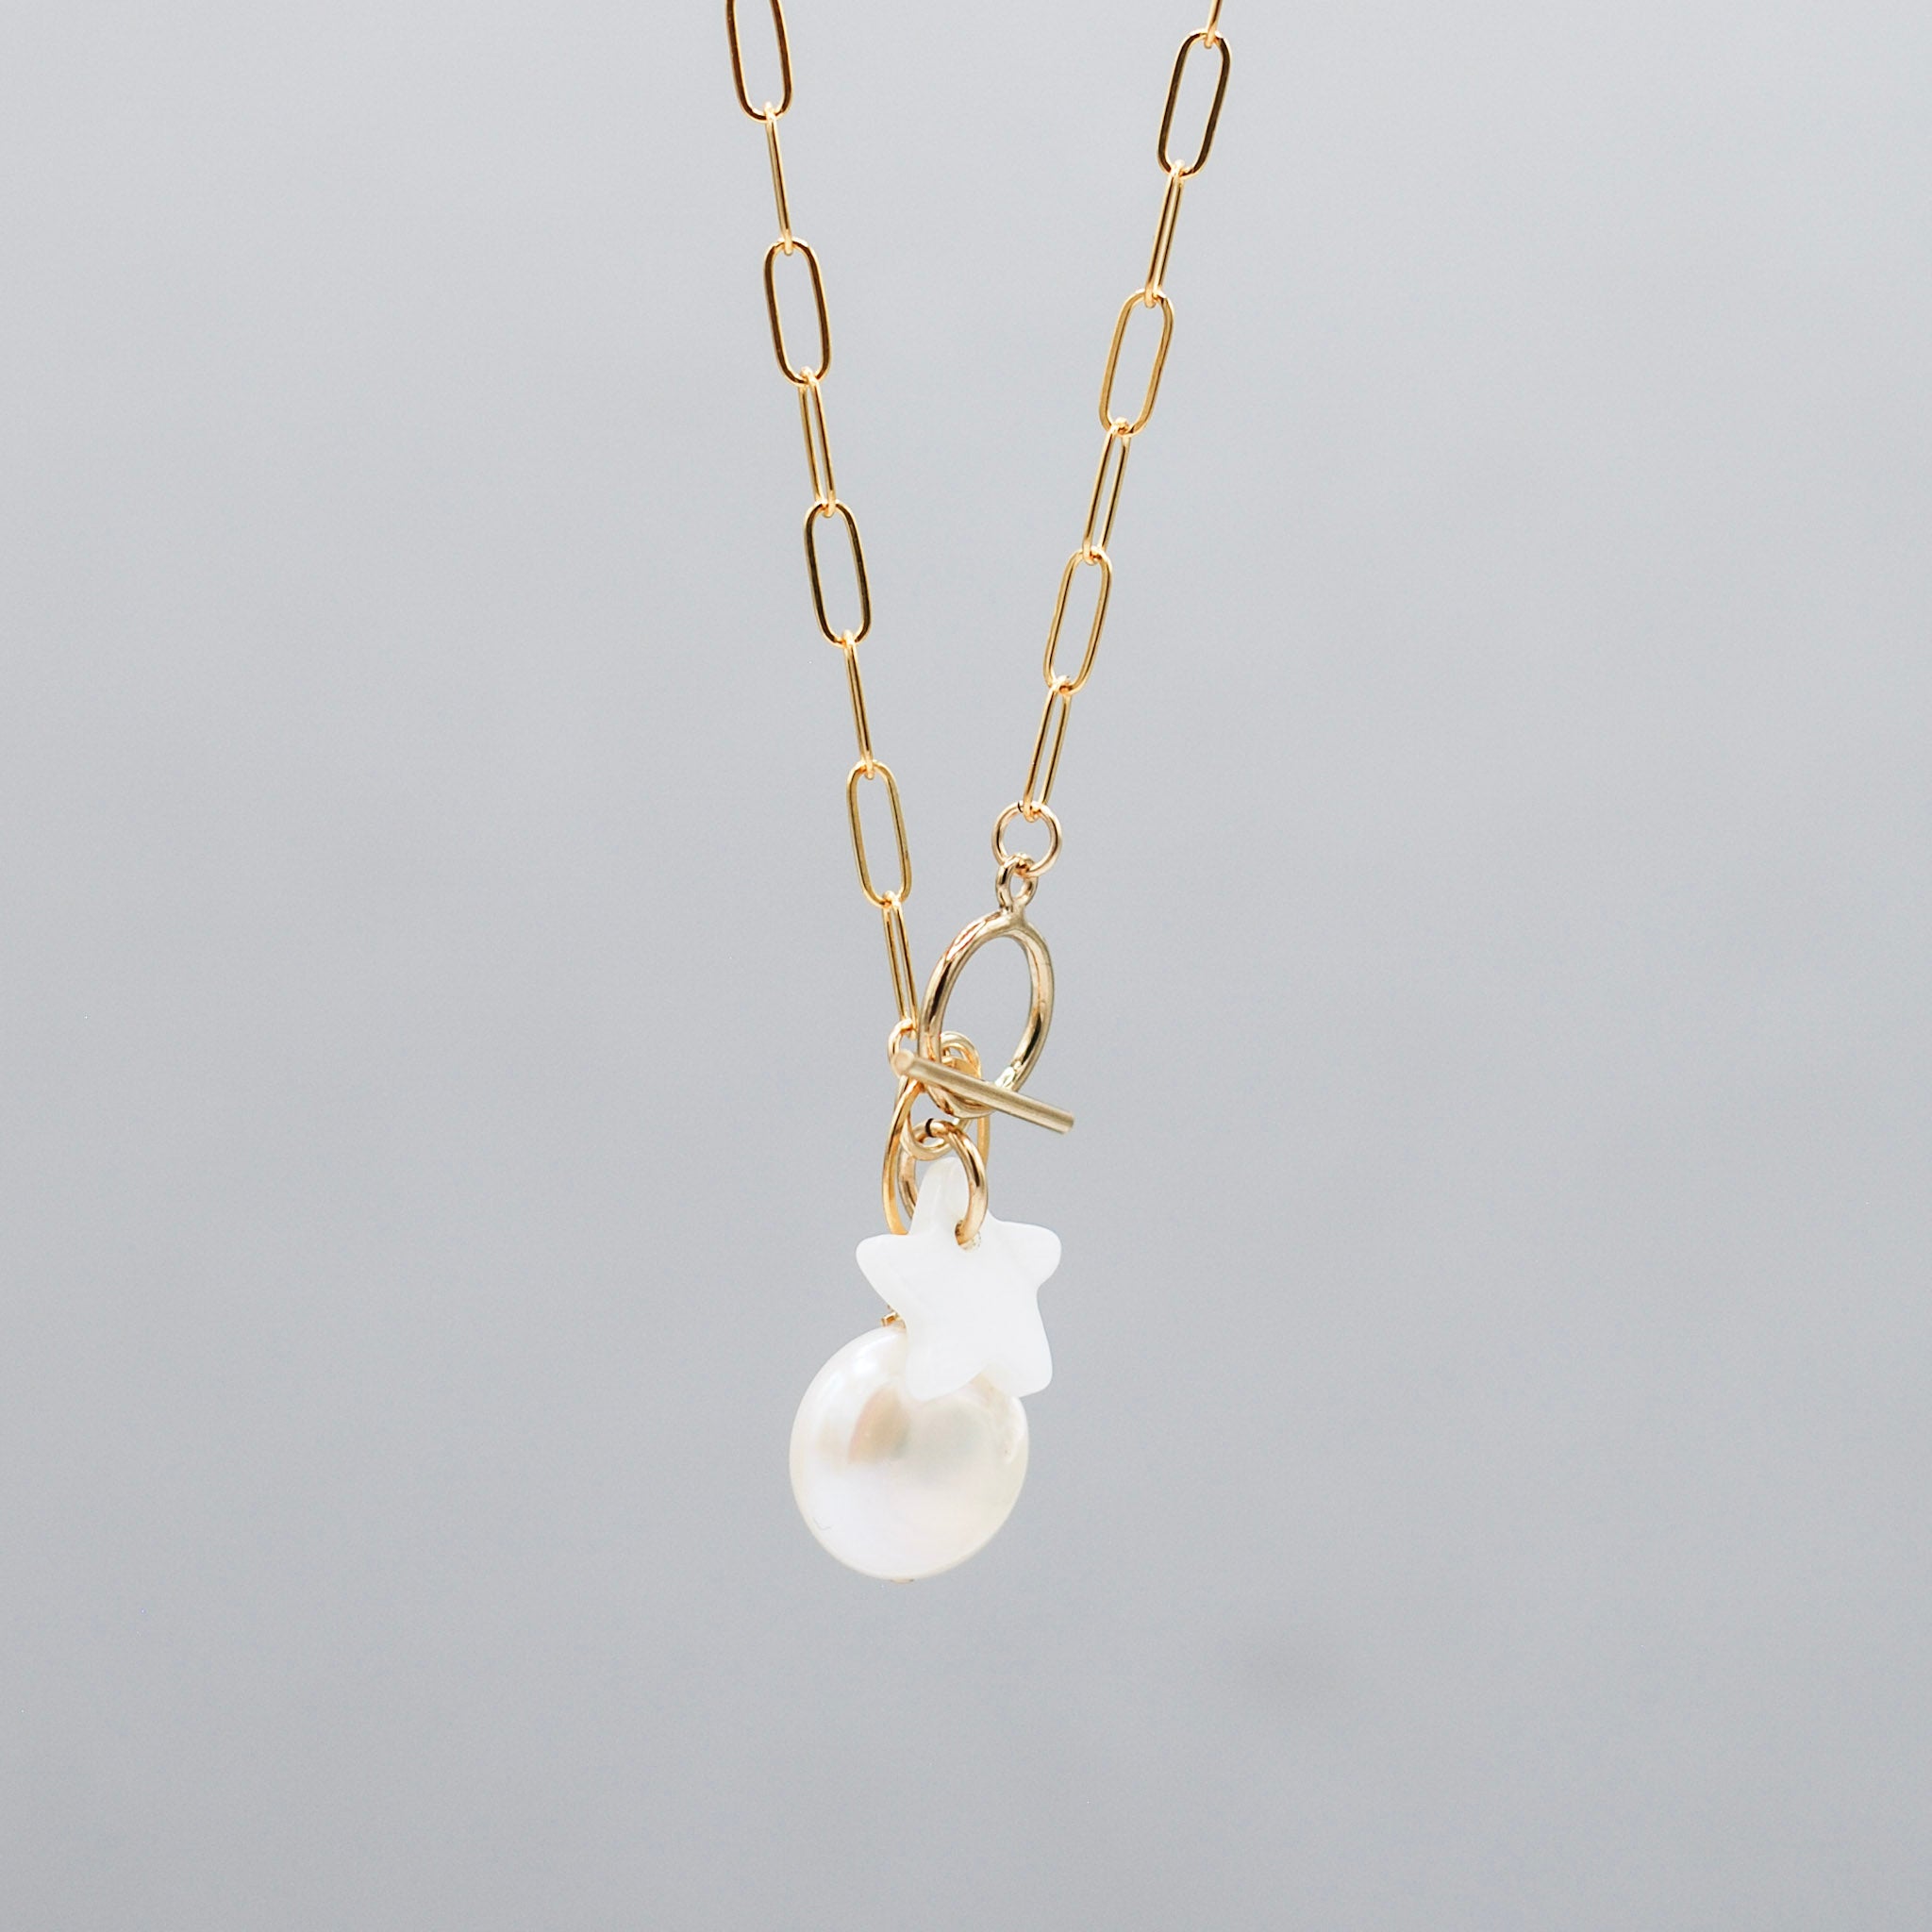 14k Gold Filled Medium Paper Clip Toggle Necklace